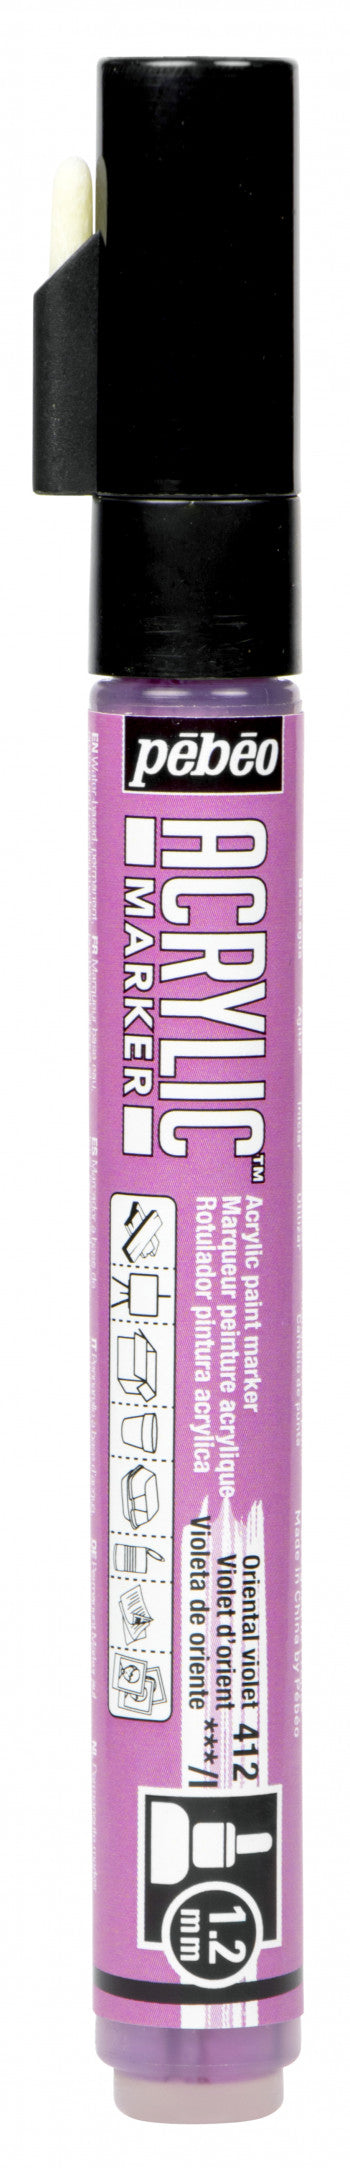 Acrylic Marker 1.2mm Pebeo Oriental Violet